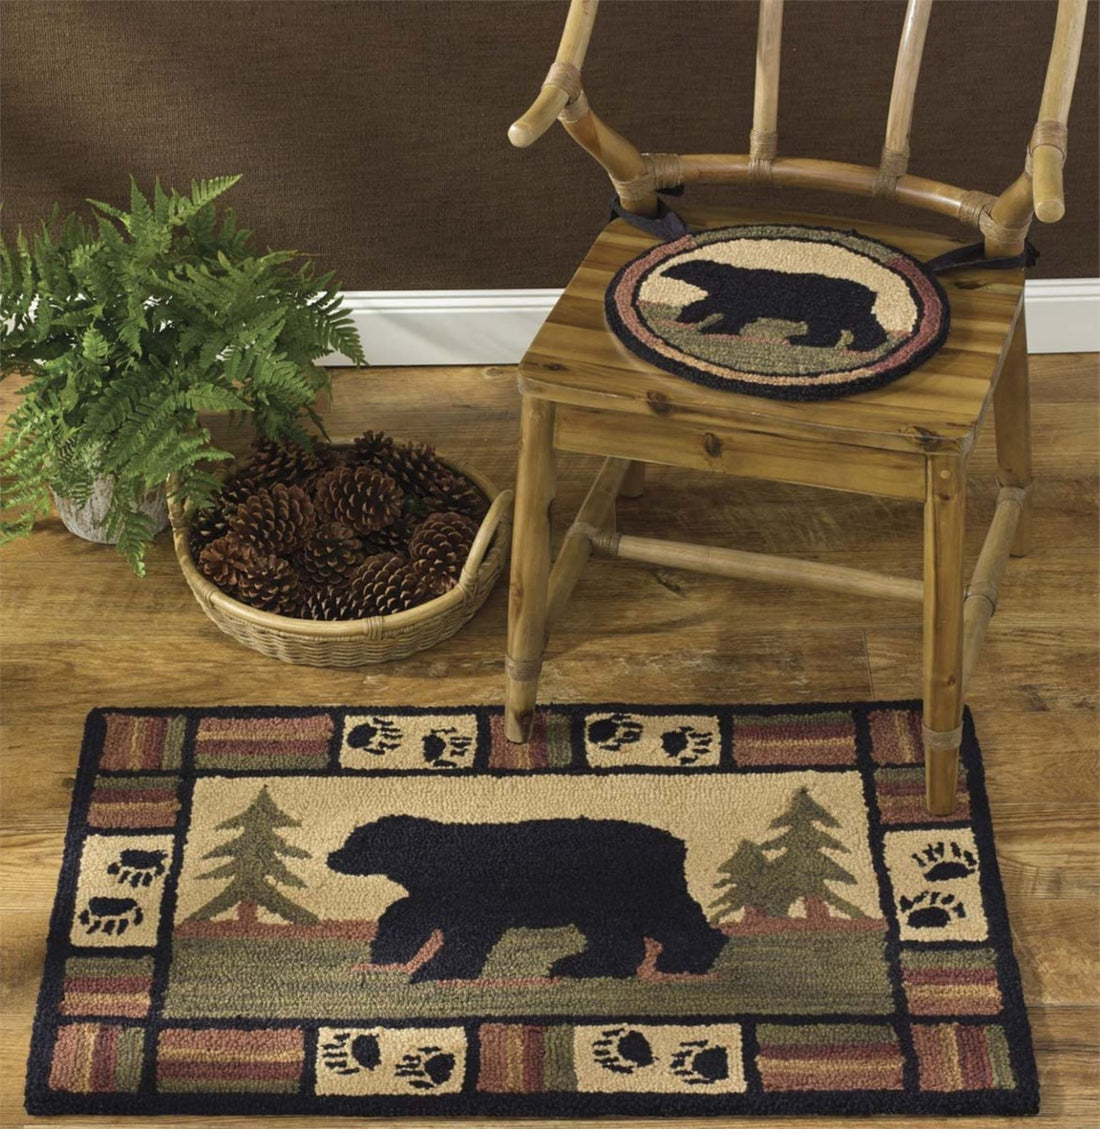 Park Designs Adirondack Rustic Black Bear Throw Rug 24" X 36 Best Seller